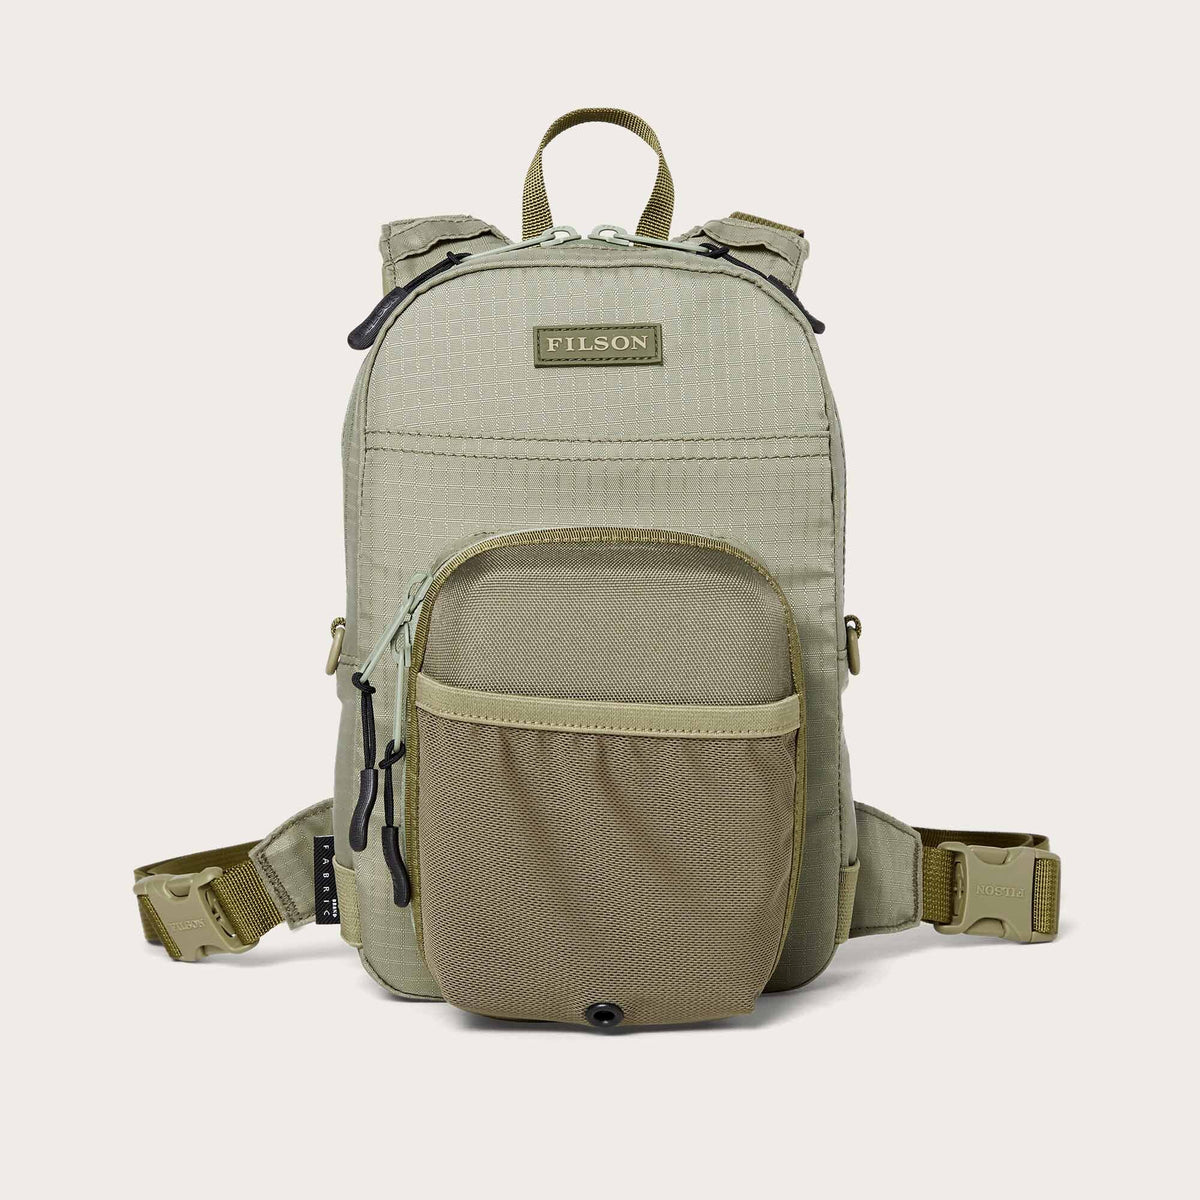 Fly Fishing Chest Bag Lightweight Waist Pack (Khaki)